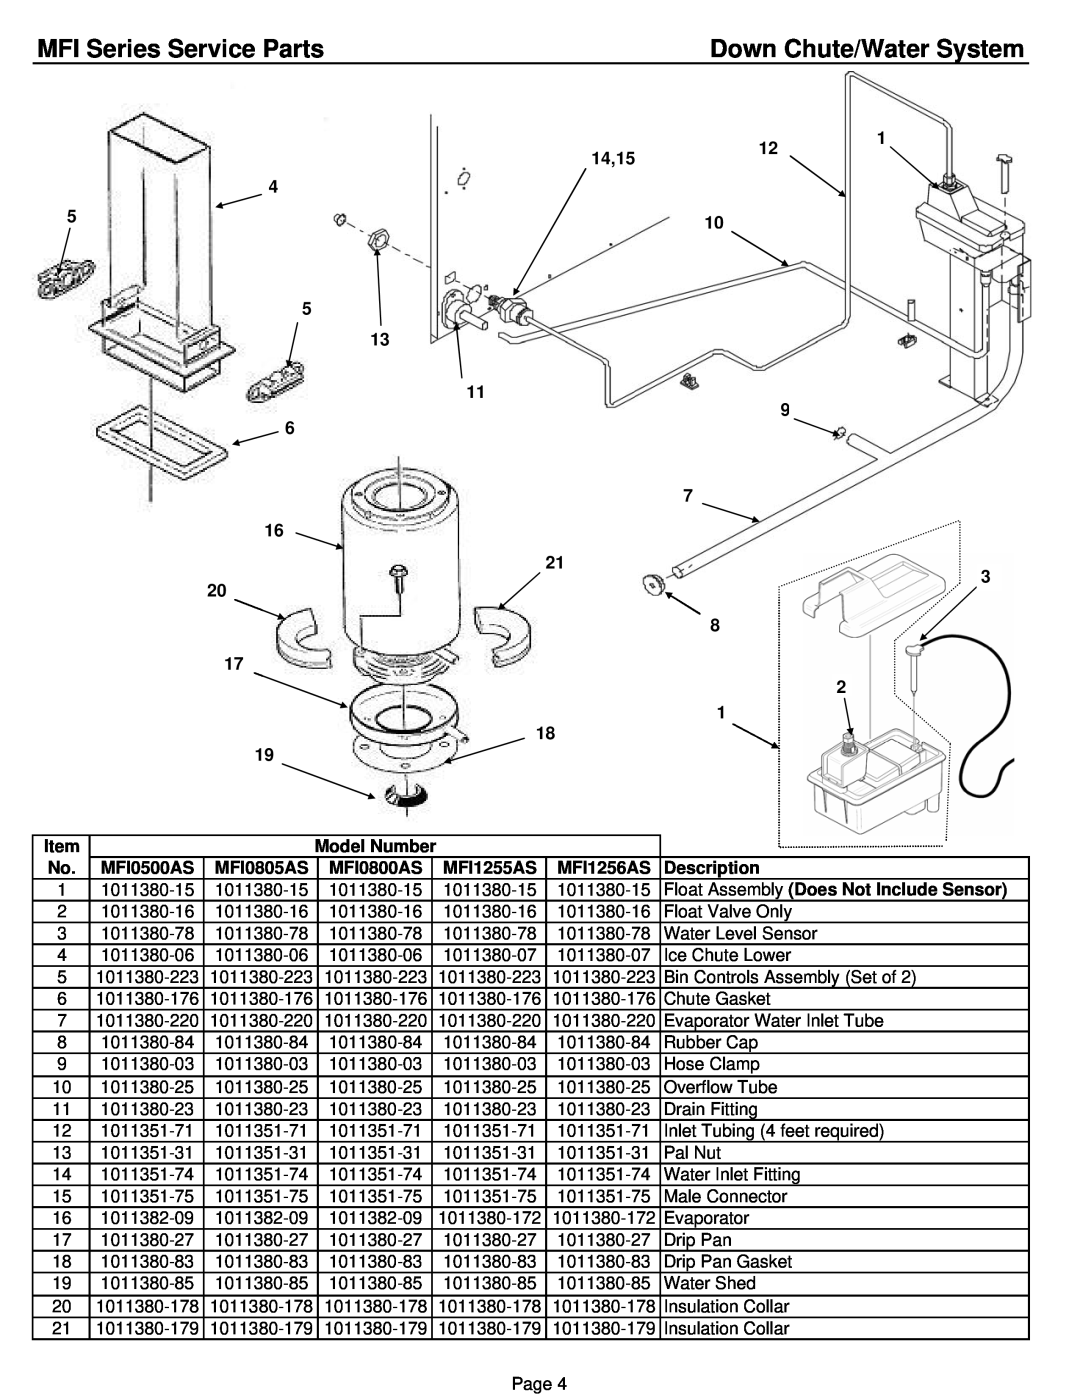 Ice-O-Matic MFI0800, MFI1255, MFI1256, MFI0500 manual Down Chute/Water System, MFI Series Service Parts, Model Number 